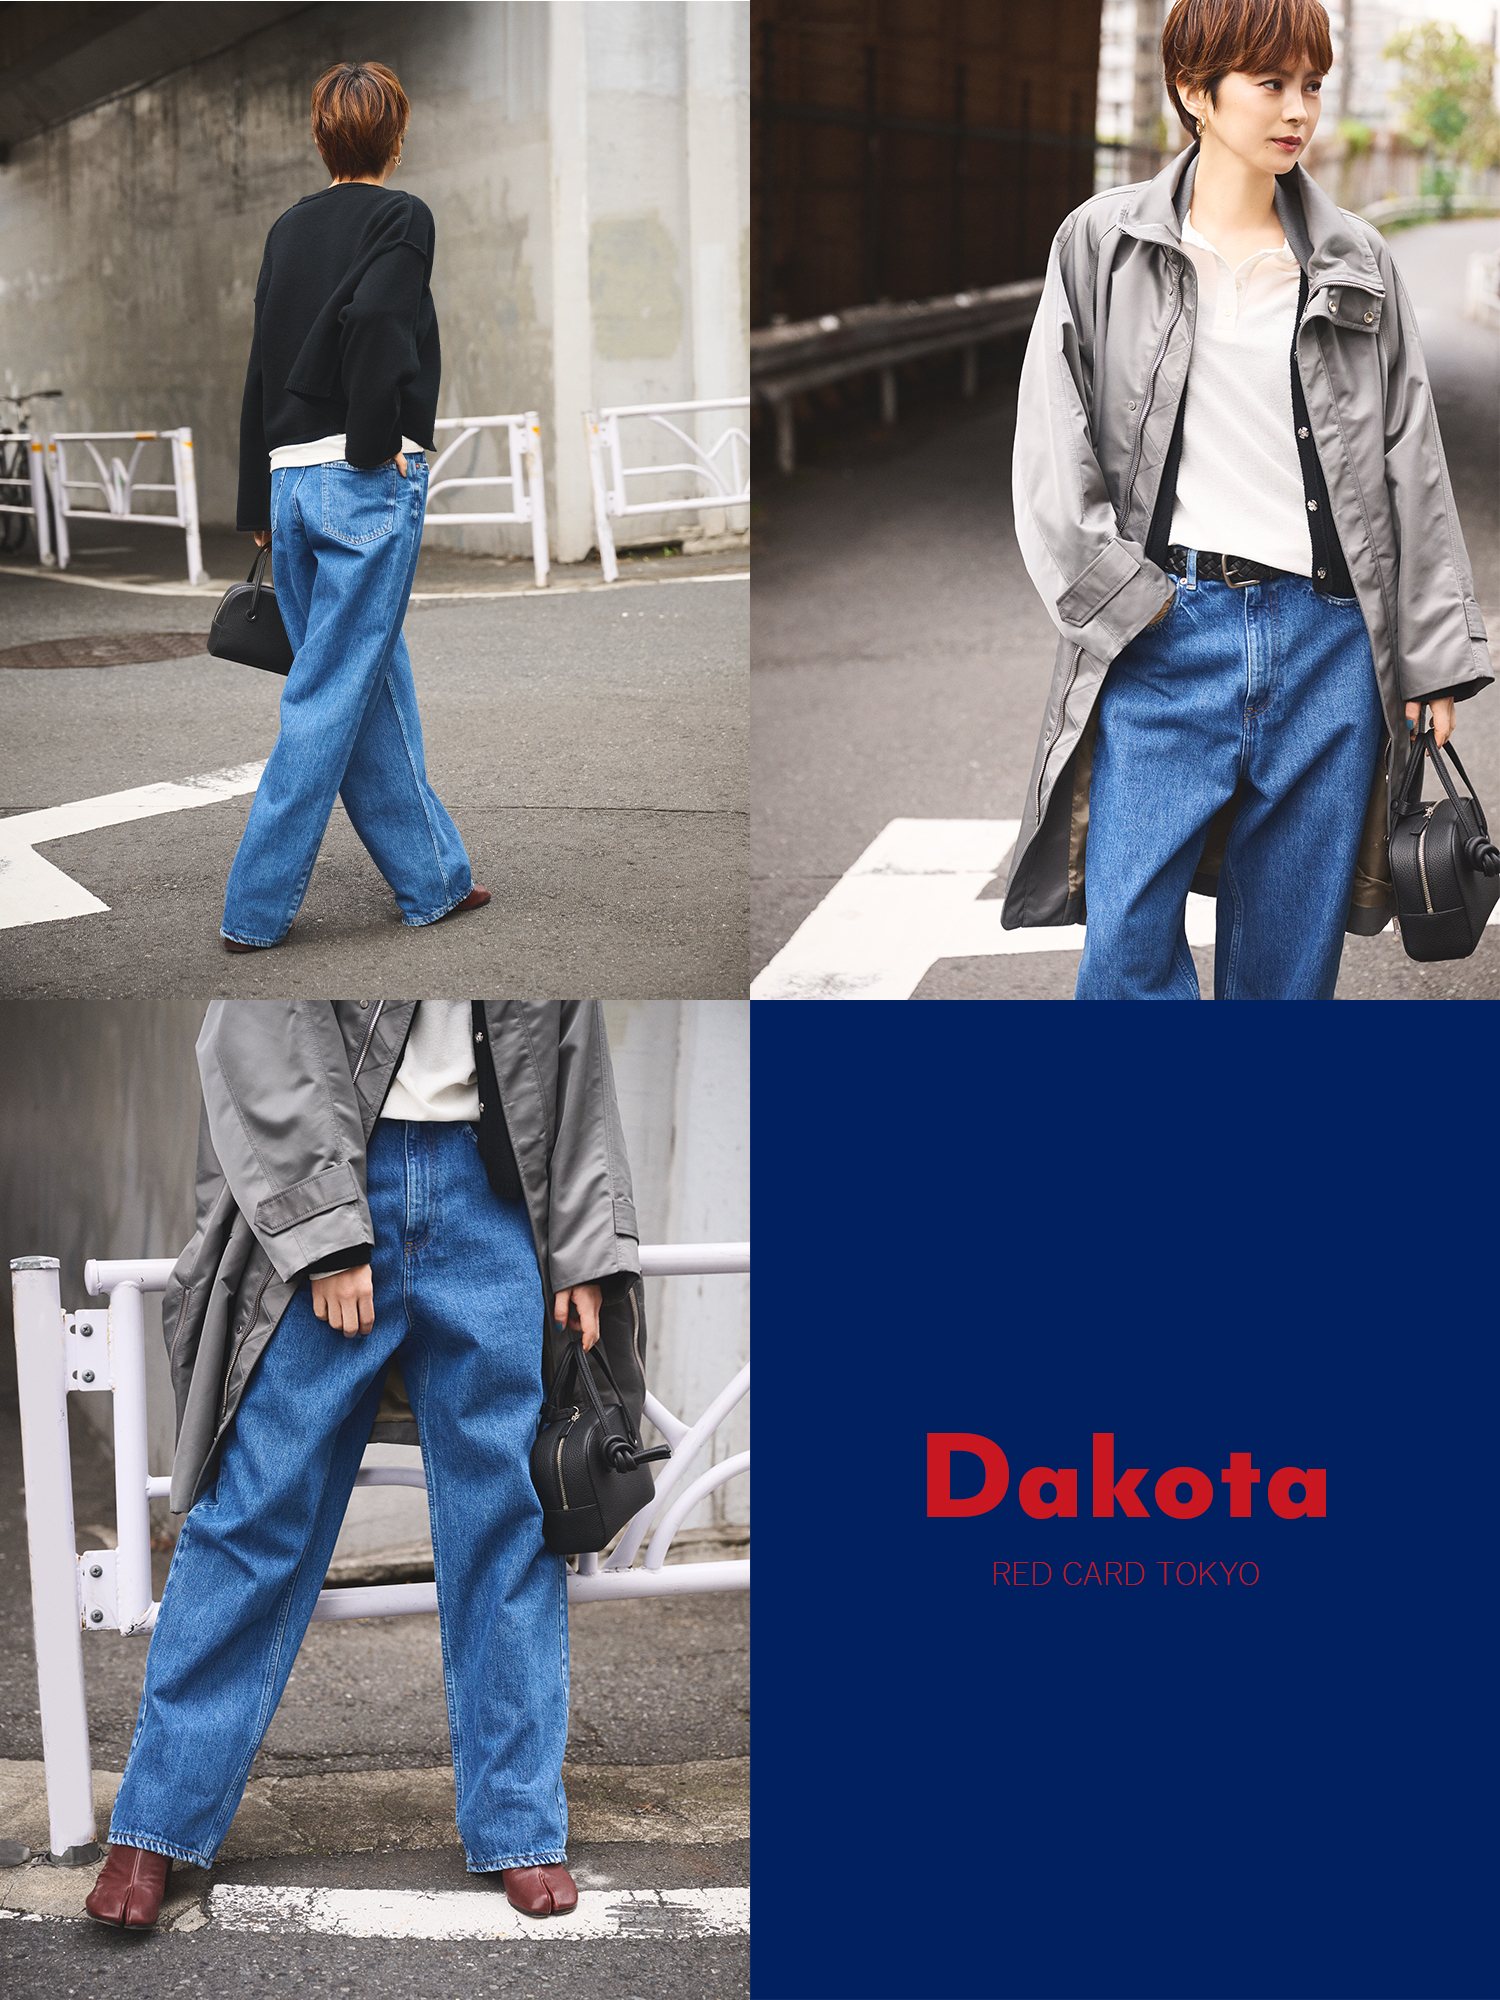 ENJOY NEW DENIM Dakota by ASAMI IMAJUKU -RED CARD TOKYO-